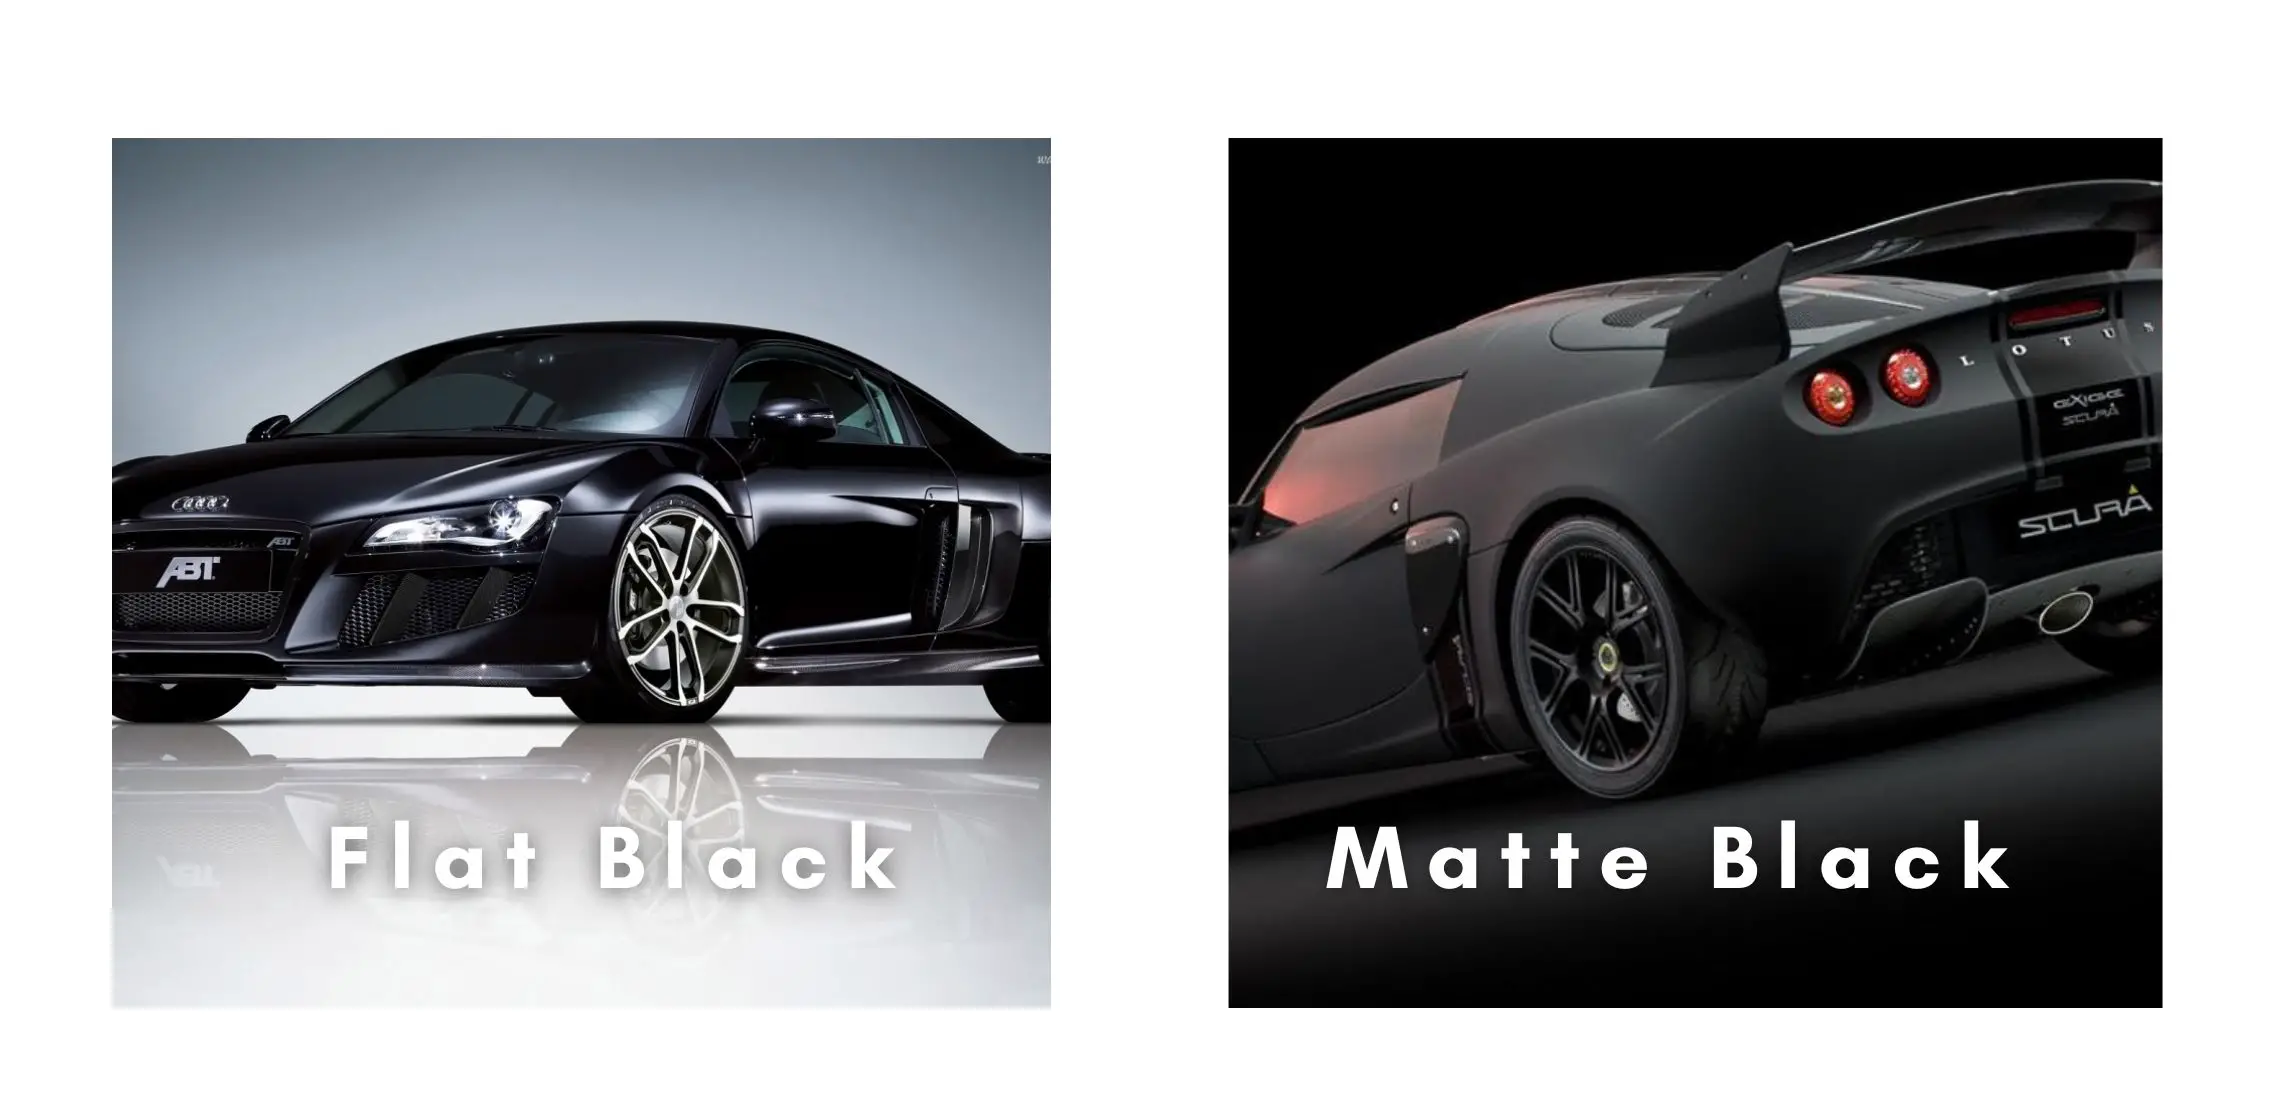 Flat Black Paint Vs Matte Black